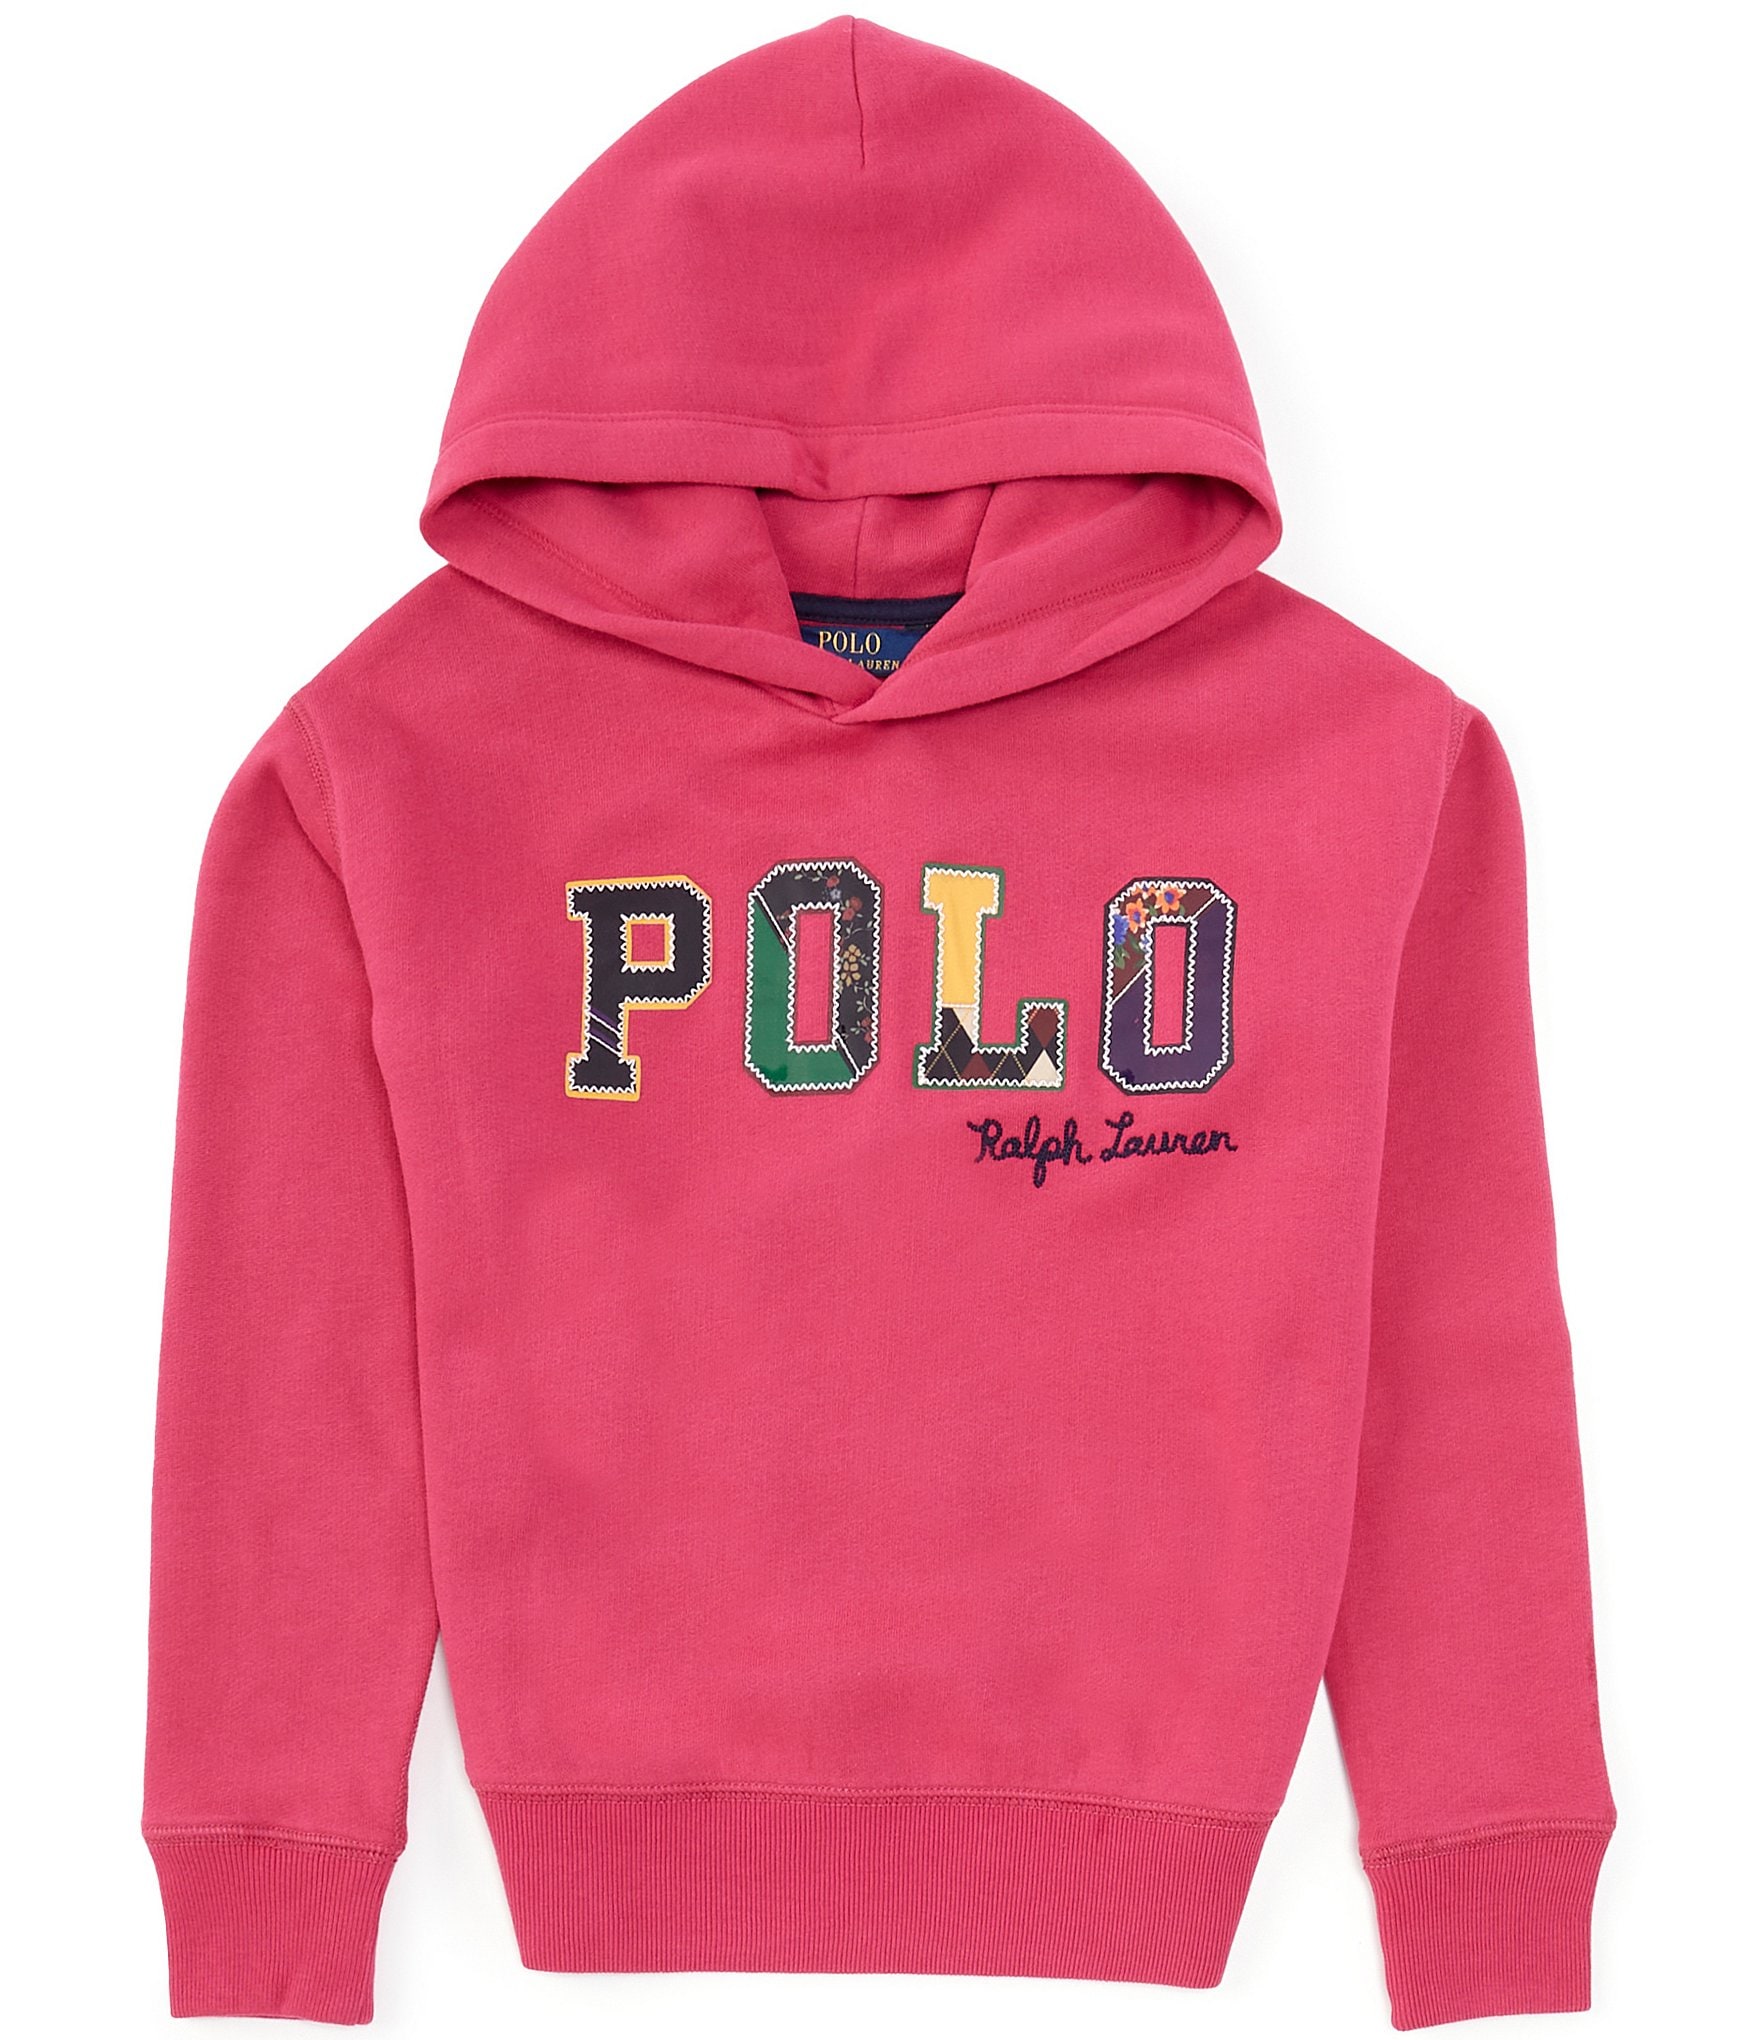 Polo Ralph Lauren Sweatshirts for Women